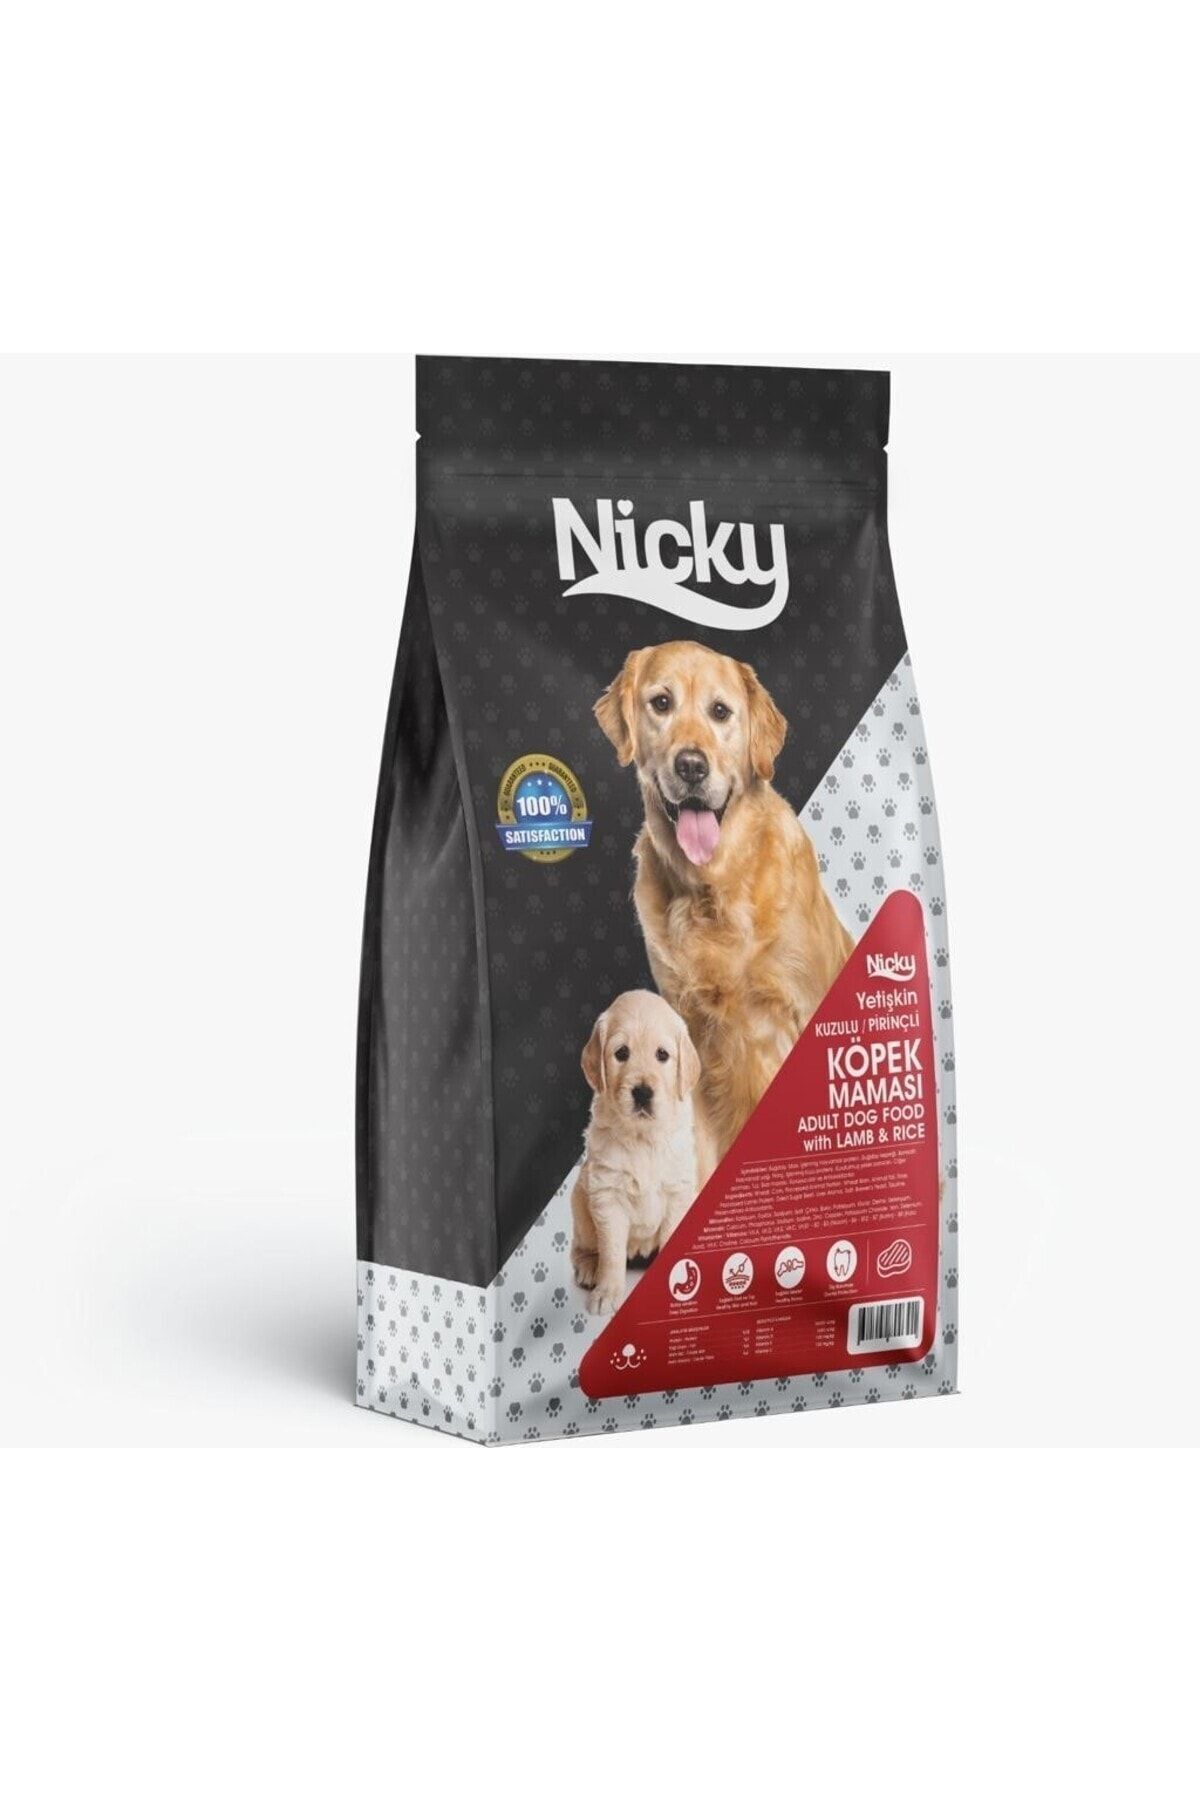 Nicky Yetişkin Kuzulu Pirinçli Köpek Maması-15 Kg